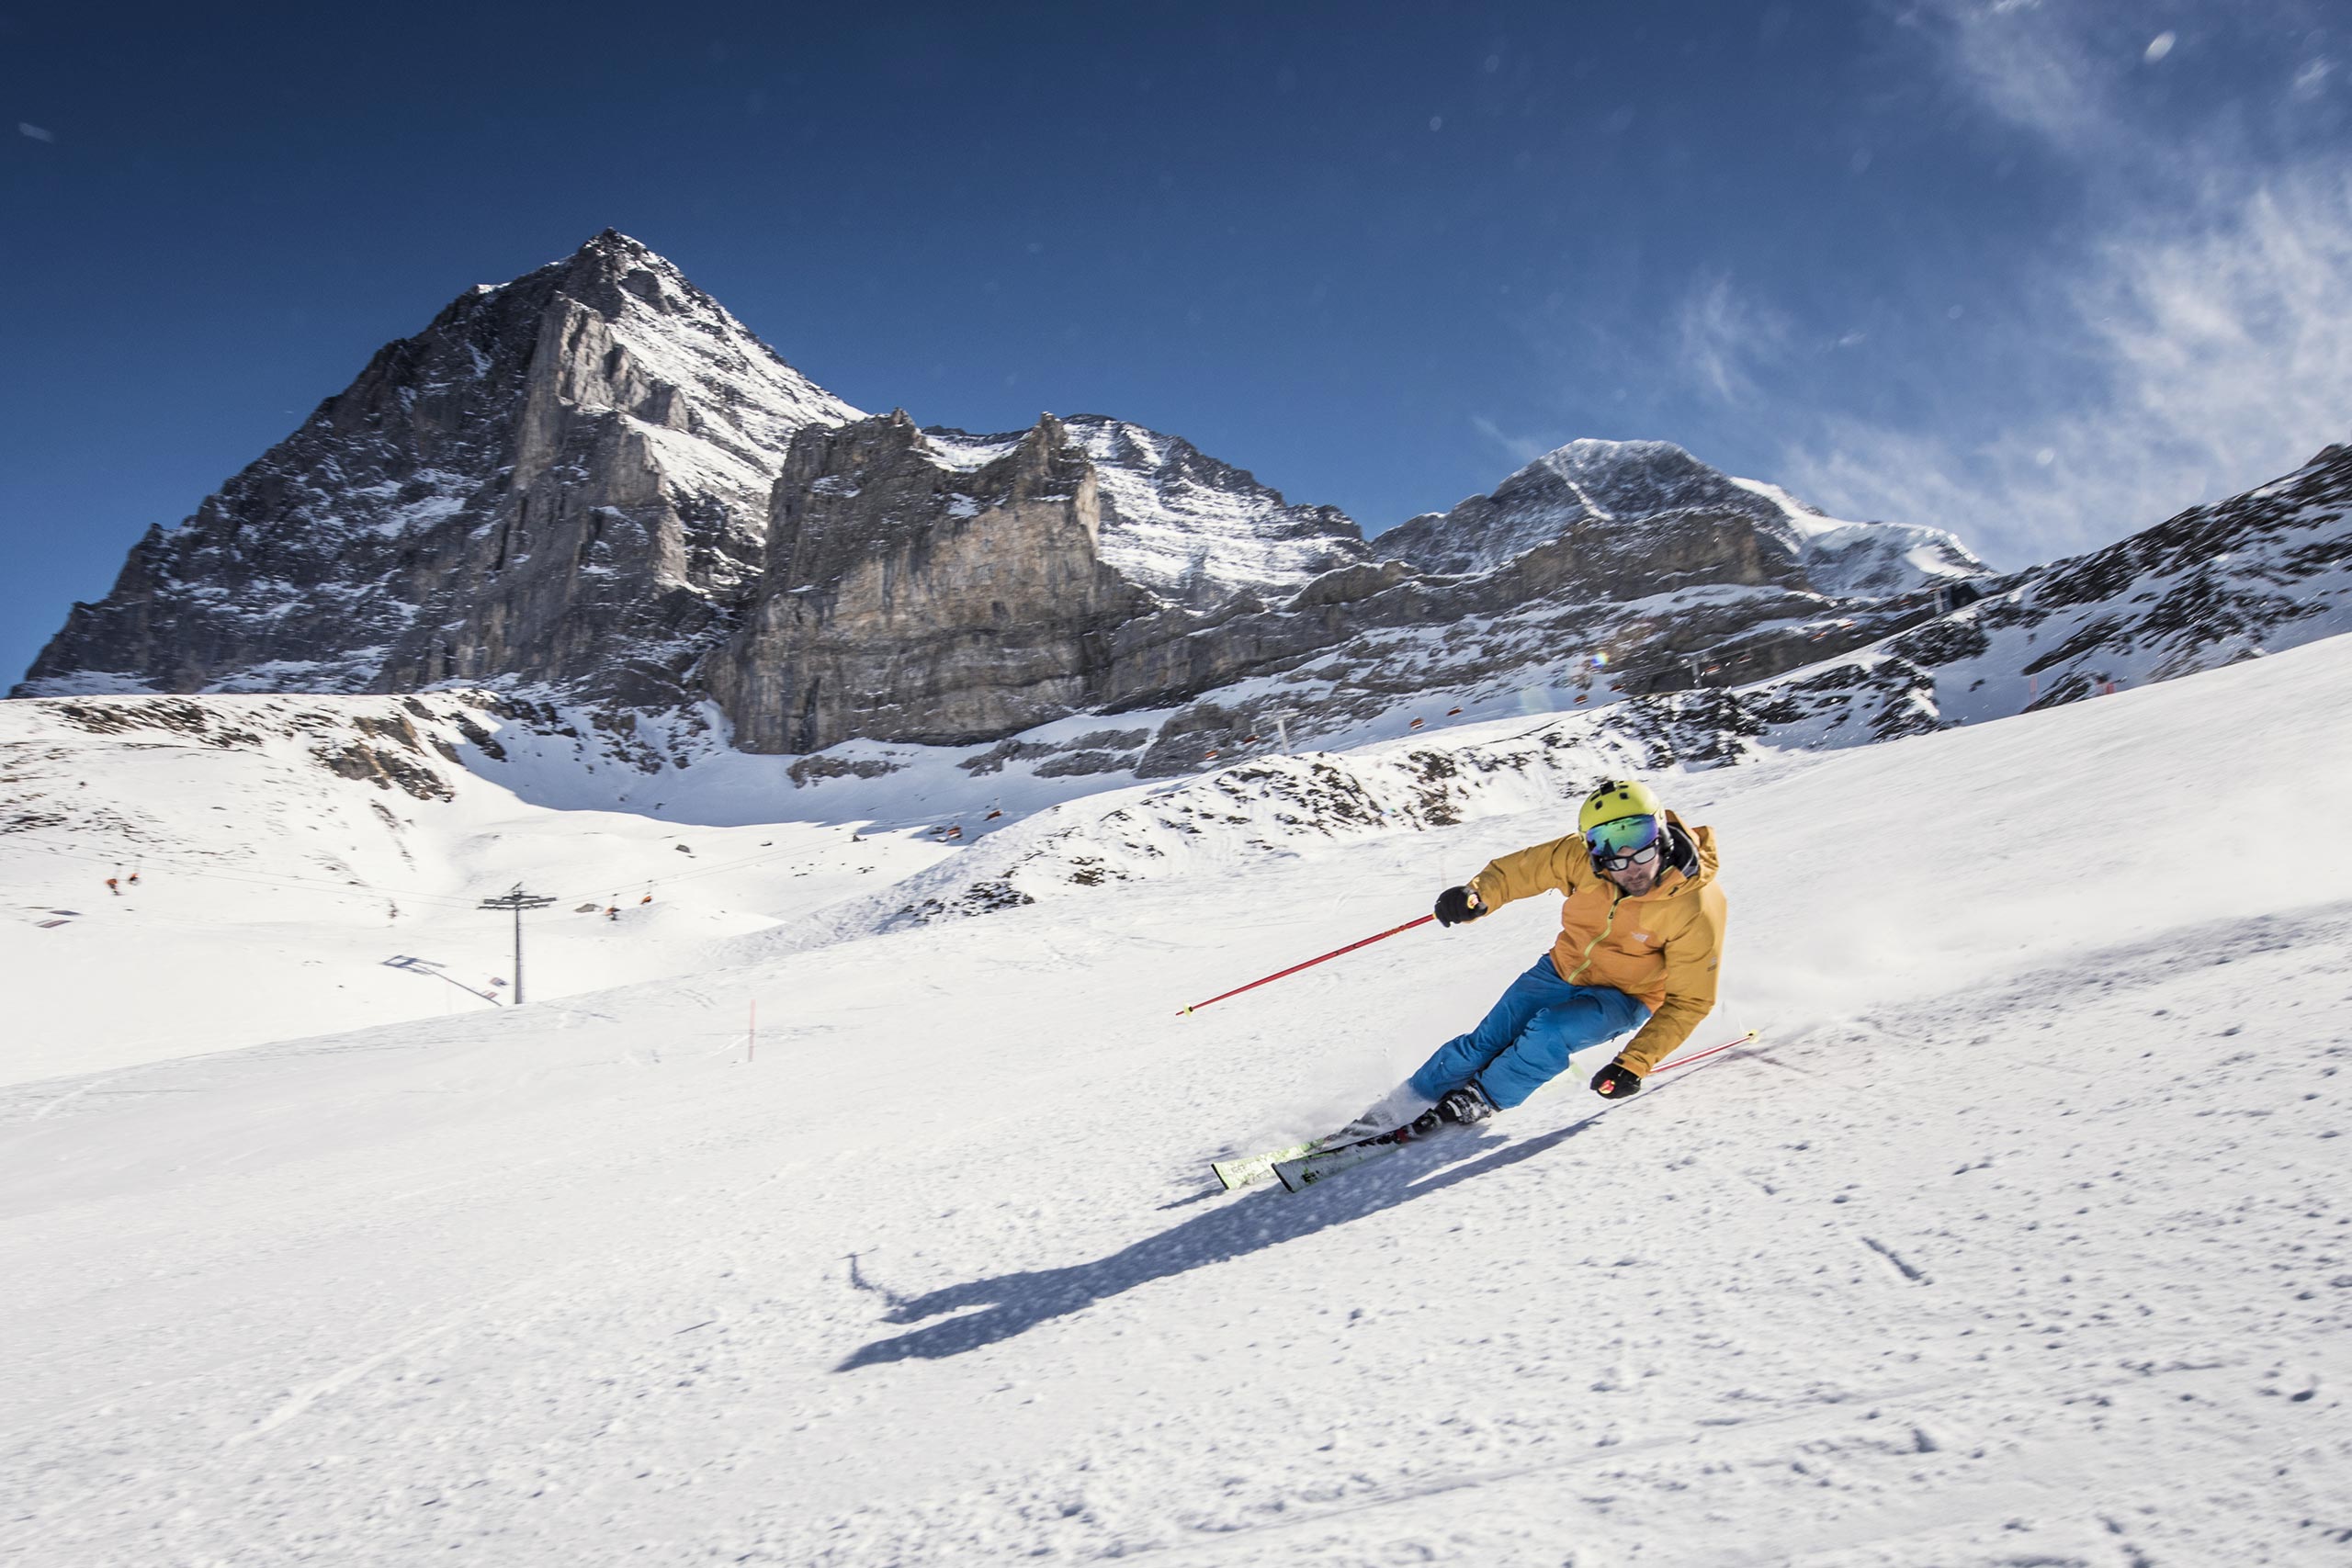 jungfrau-ski-region-skifahrer-winter-schnee-piste.jpg